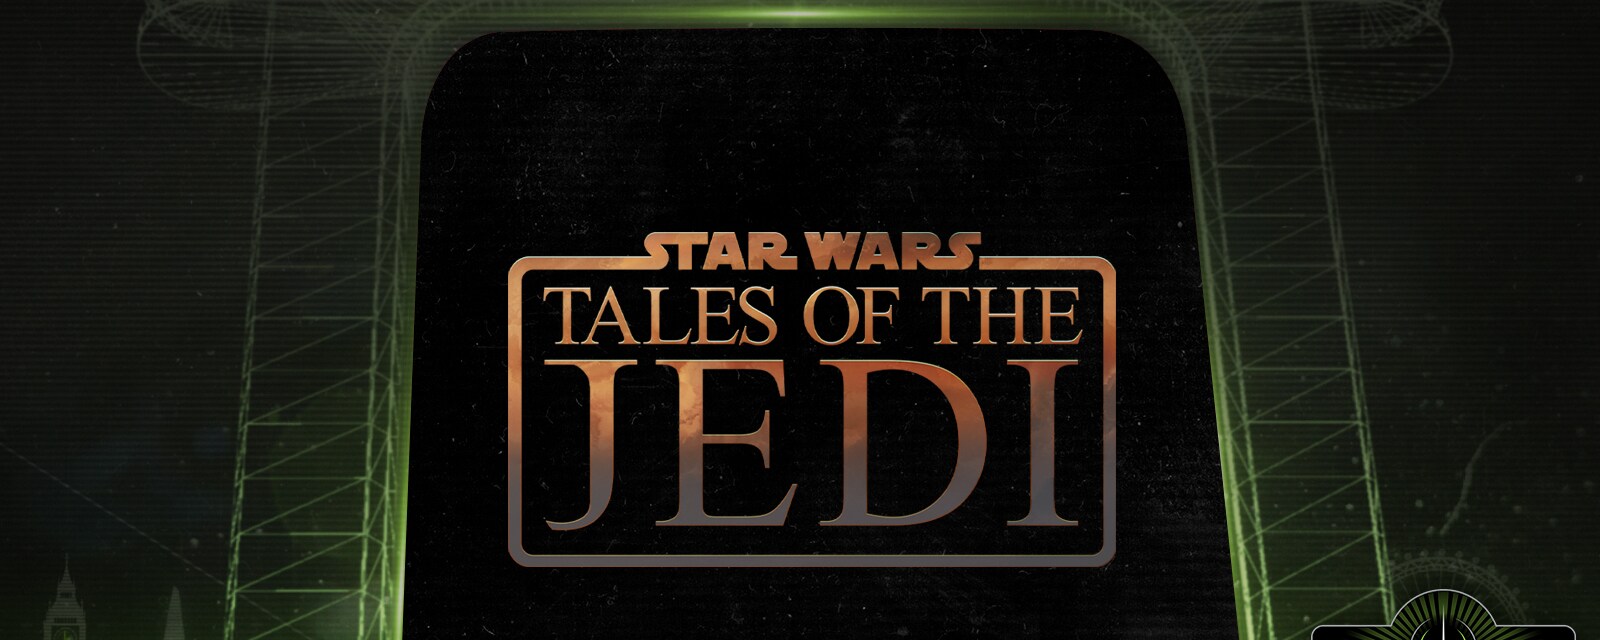 Star Wars: Tales of the Jedi Season 1 logo